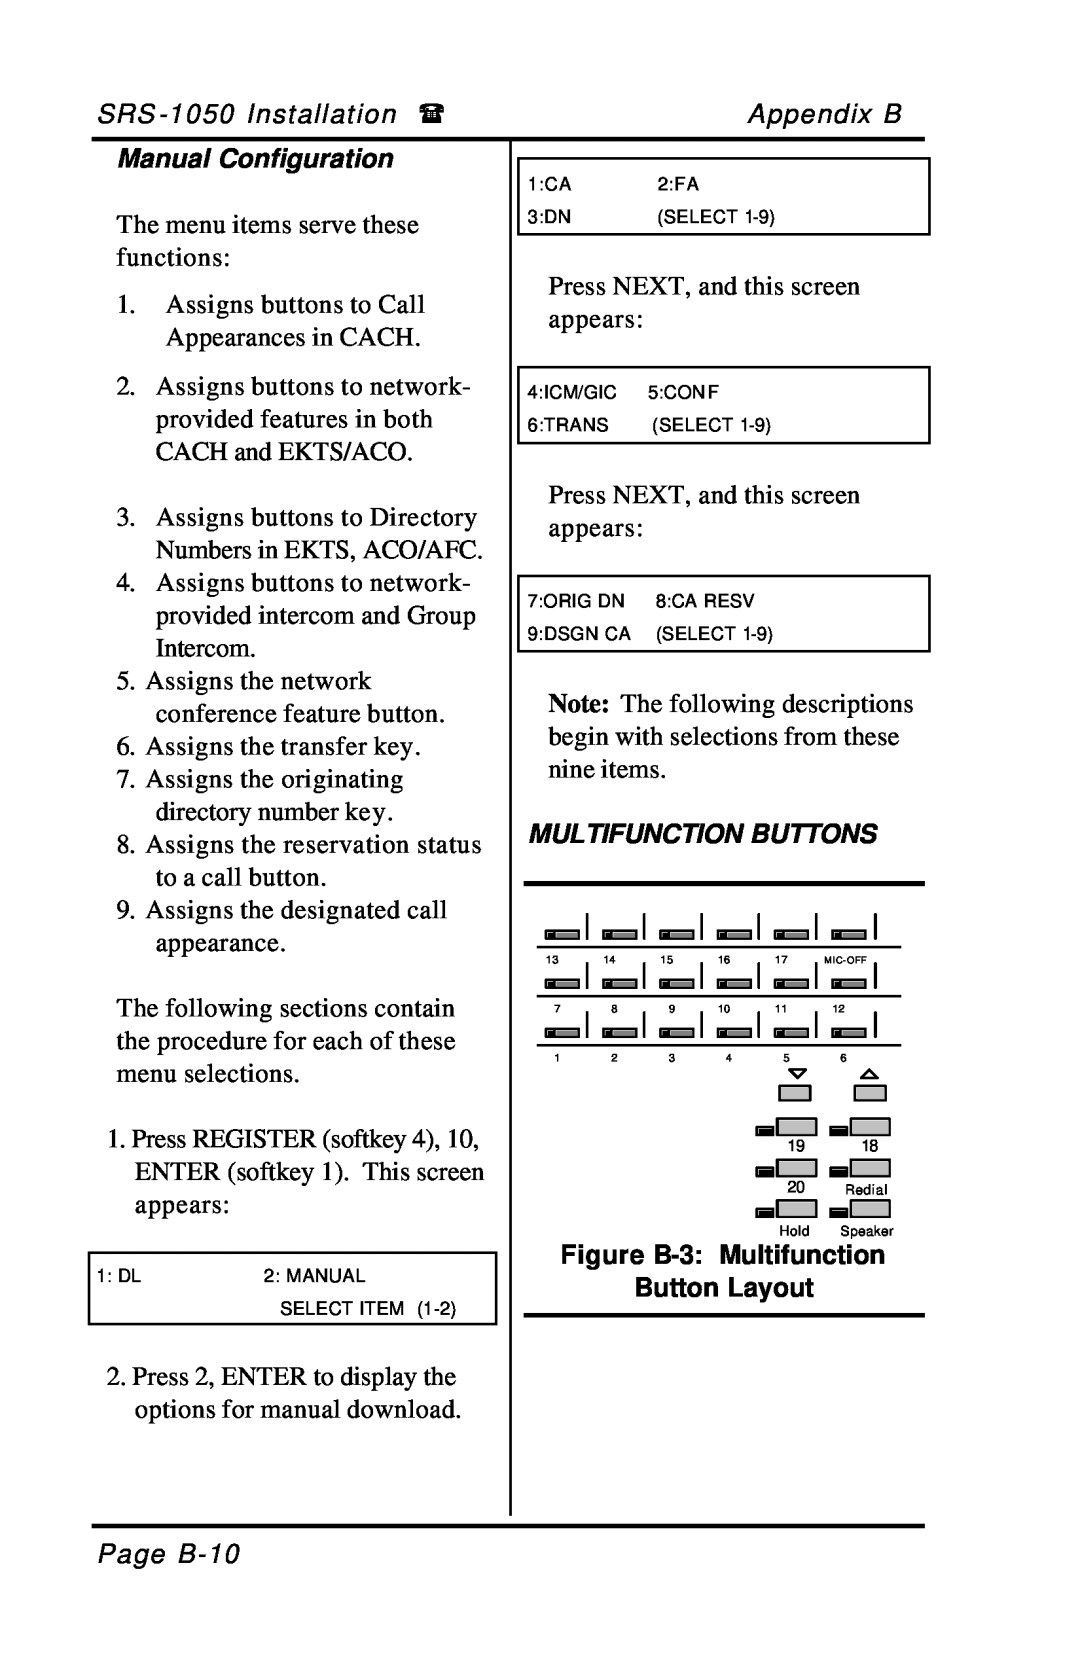 Fujitsu SRS-1050 manual Manual Configuration, Figure B-3 Multifunction Button Layout, Multifunction Buttons 